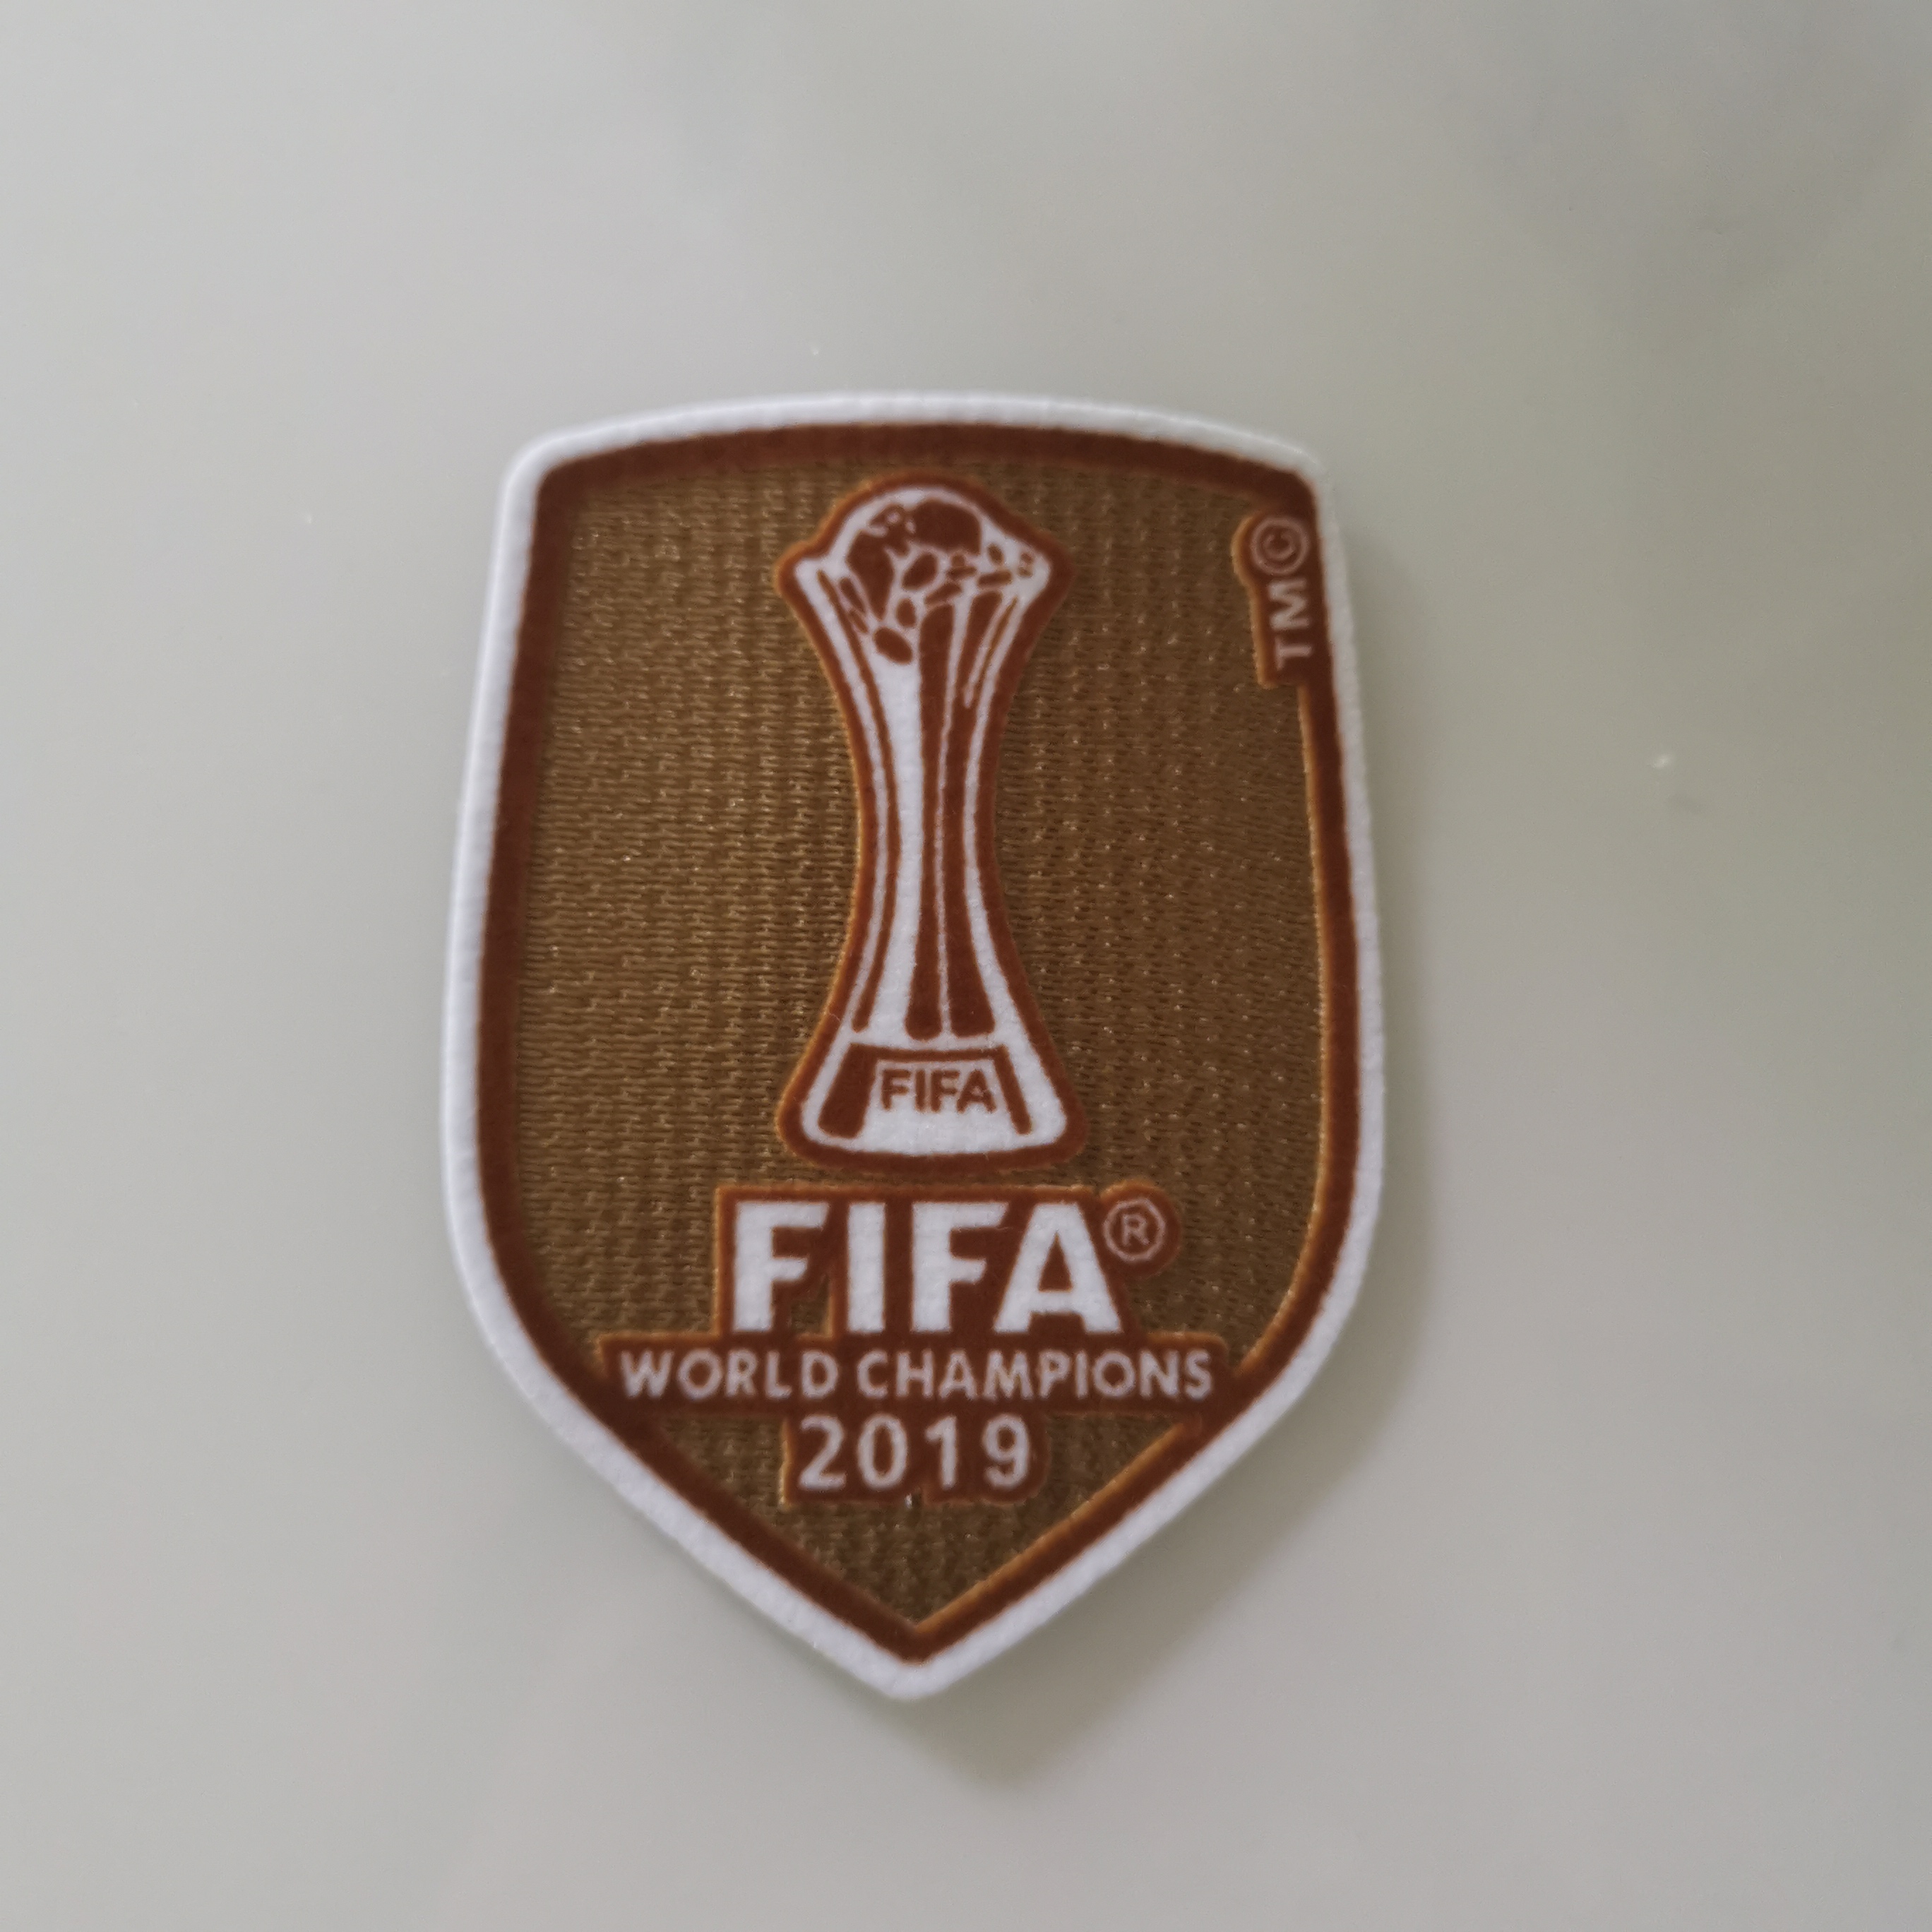 Images/Blog/YBGVaIUV-อาร์มสโมสรโลก ลิเวอร์พูล Fifa  World Champions 2019 Patch liverpo.jpg